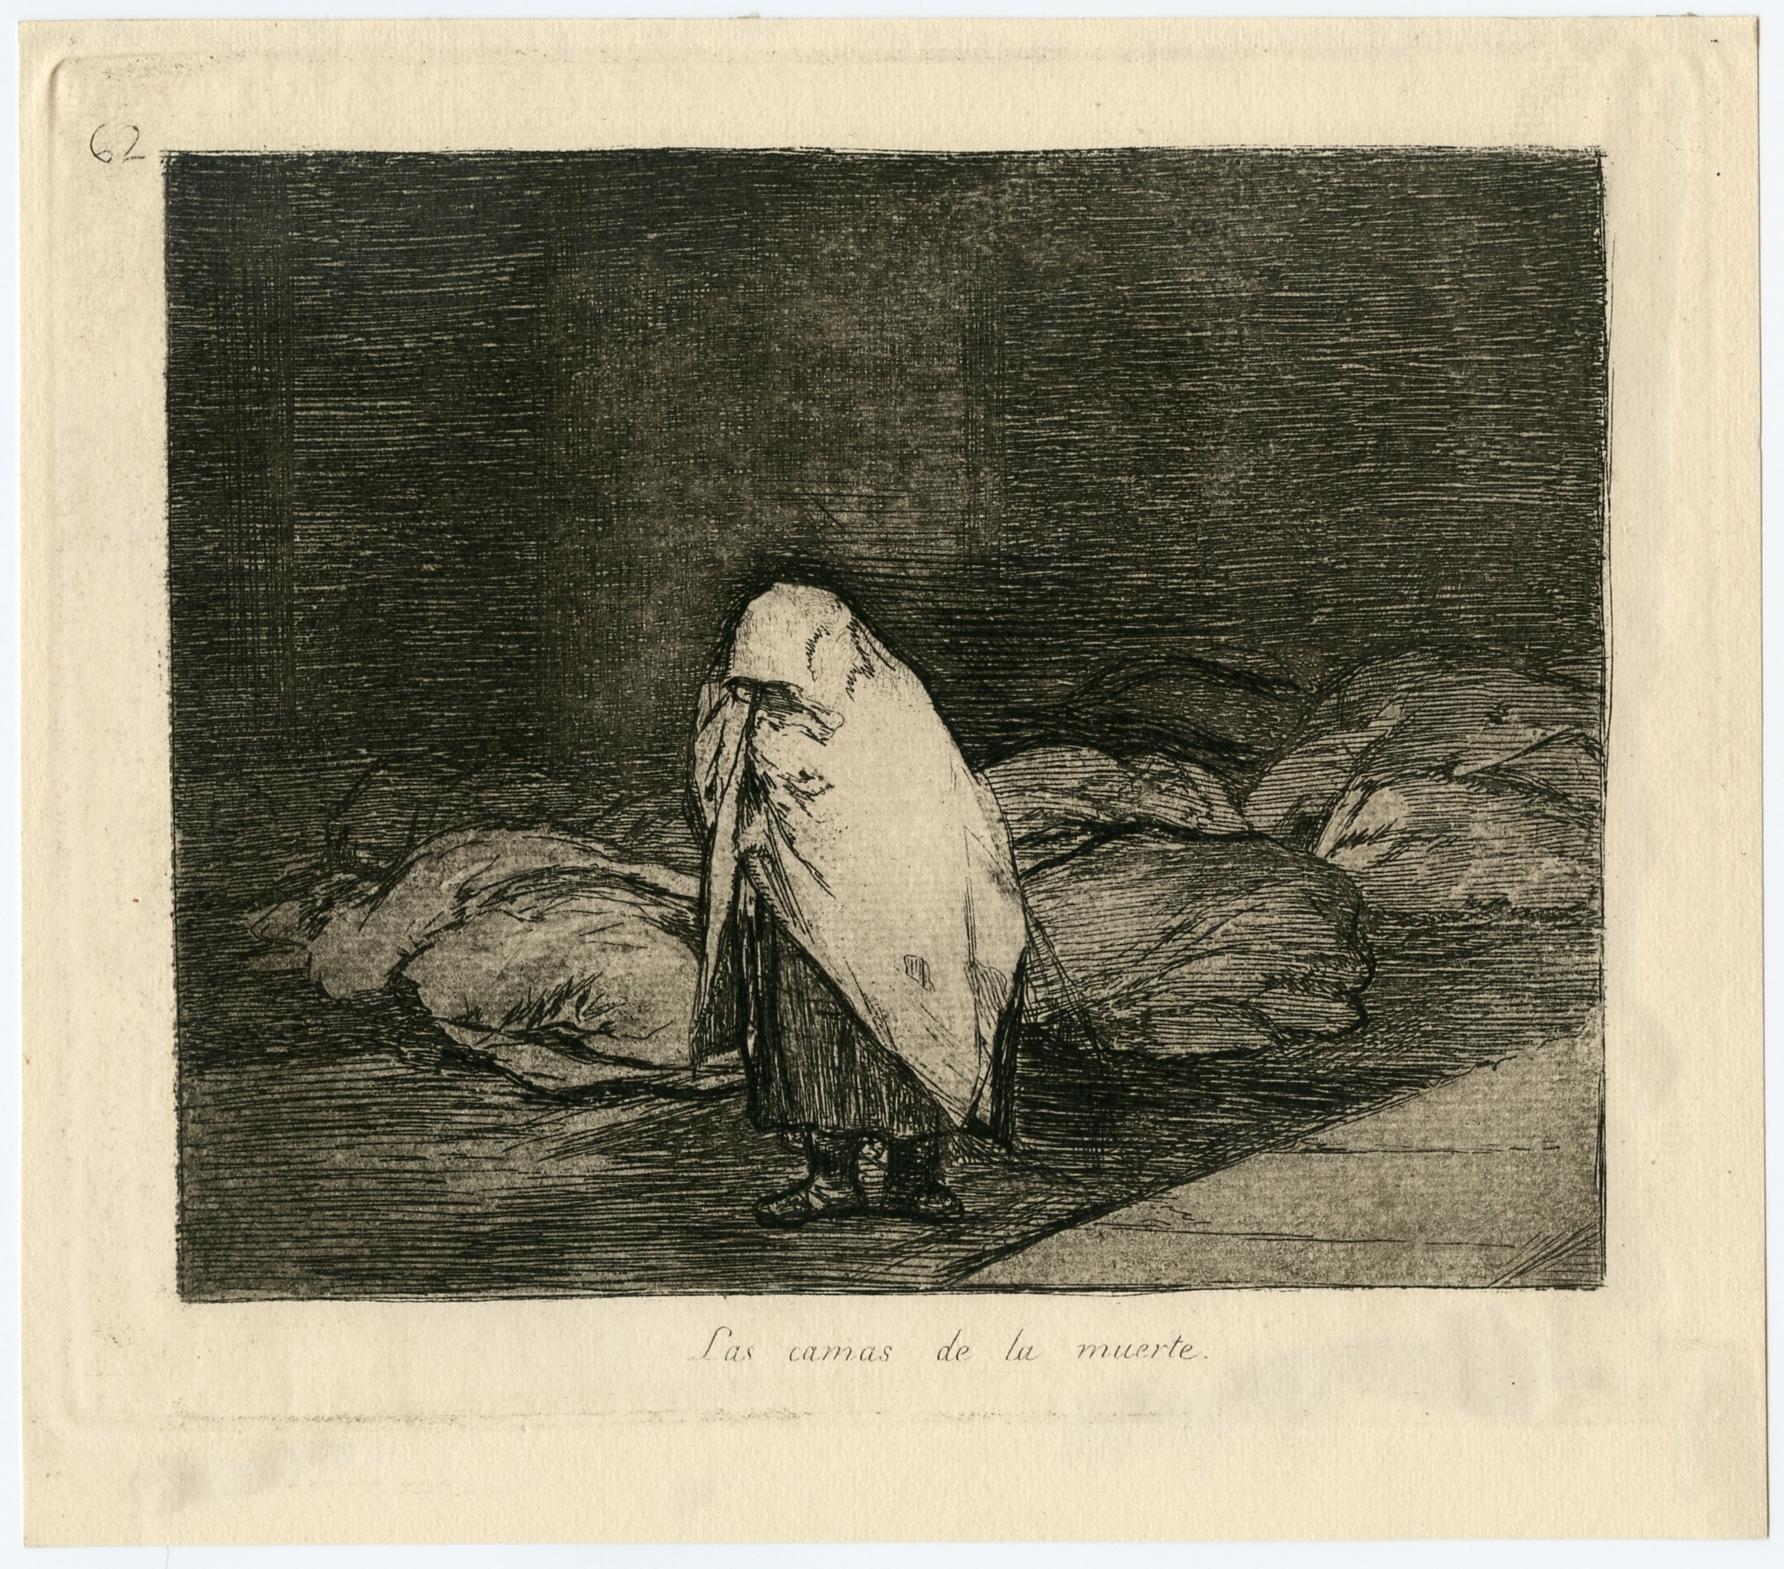 "Las camas de la muerte" etching - Plate 62 - Print by Francisco Goya